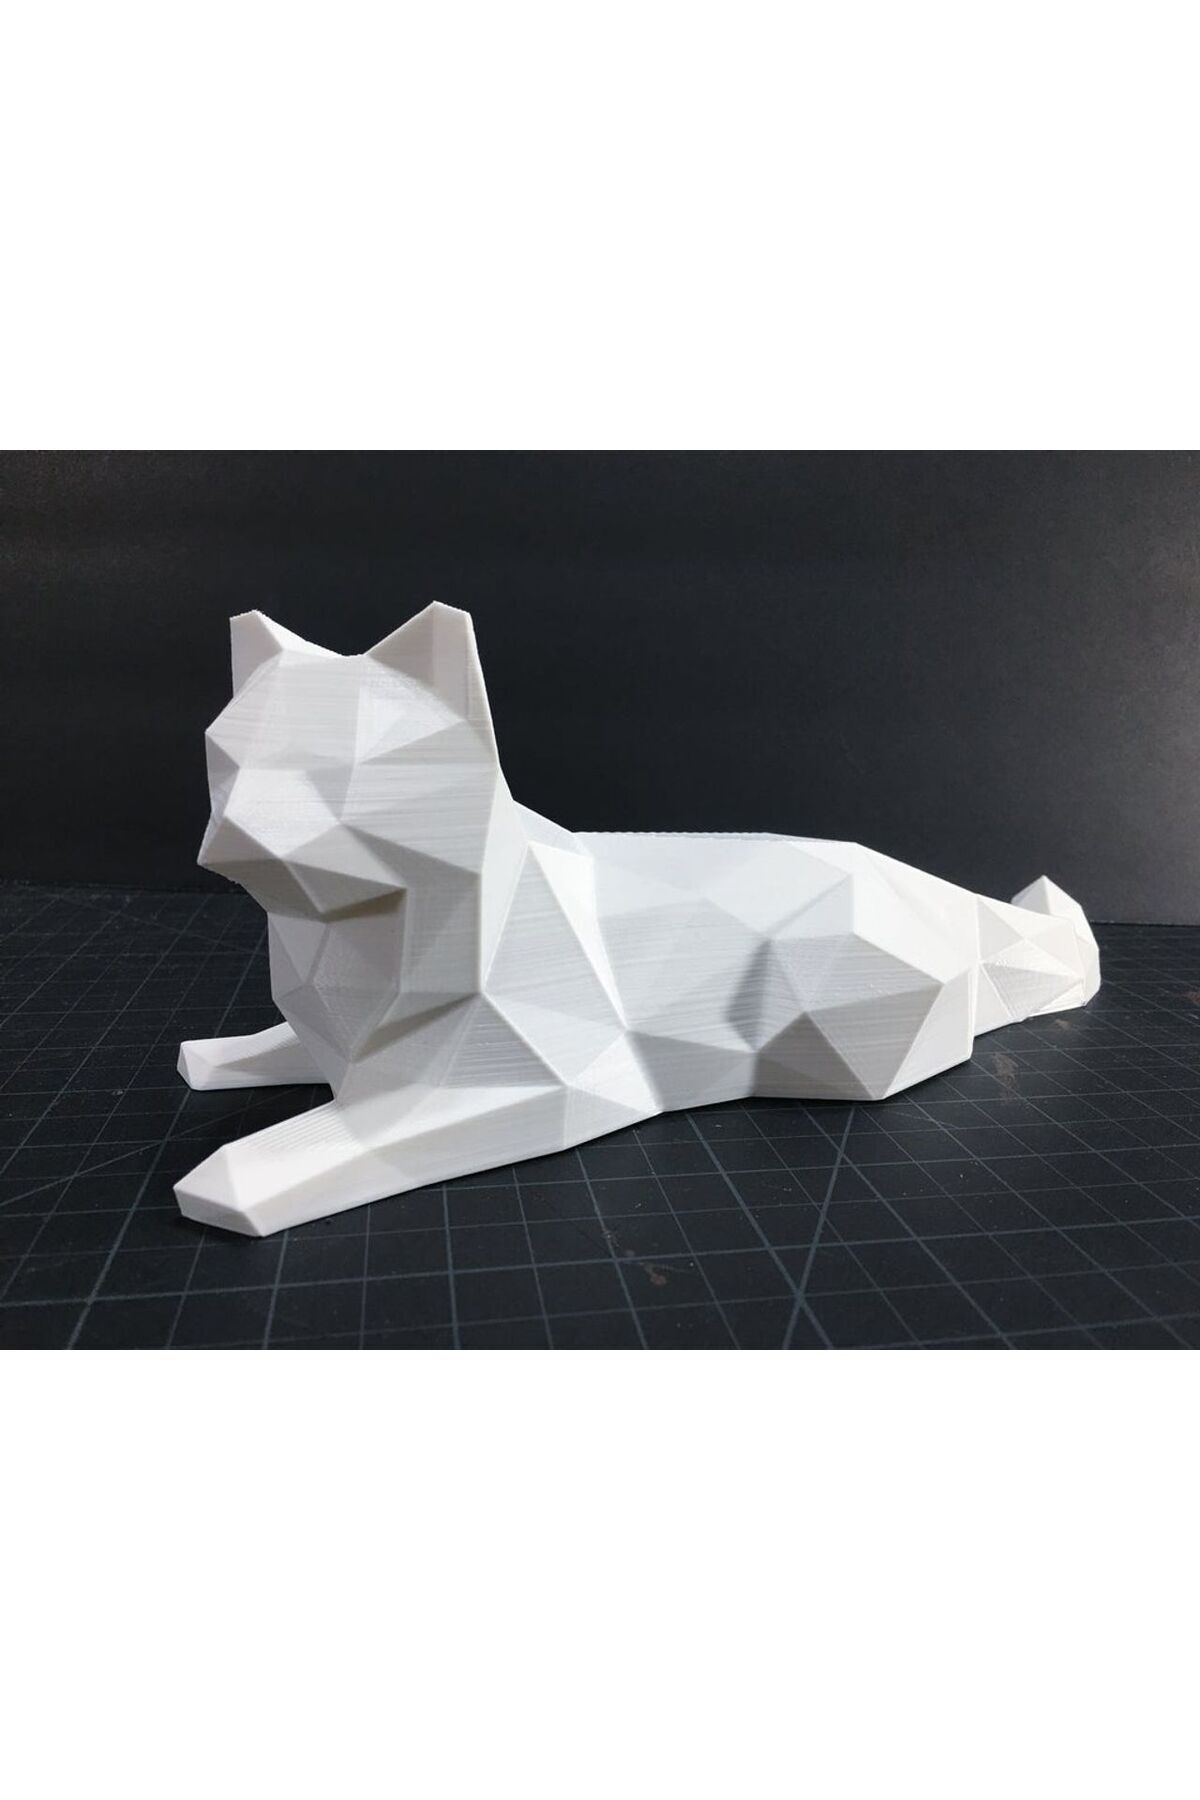 3Duman Low Poly Oturan Kedi Figürü 2 - Beyaz - 13cm